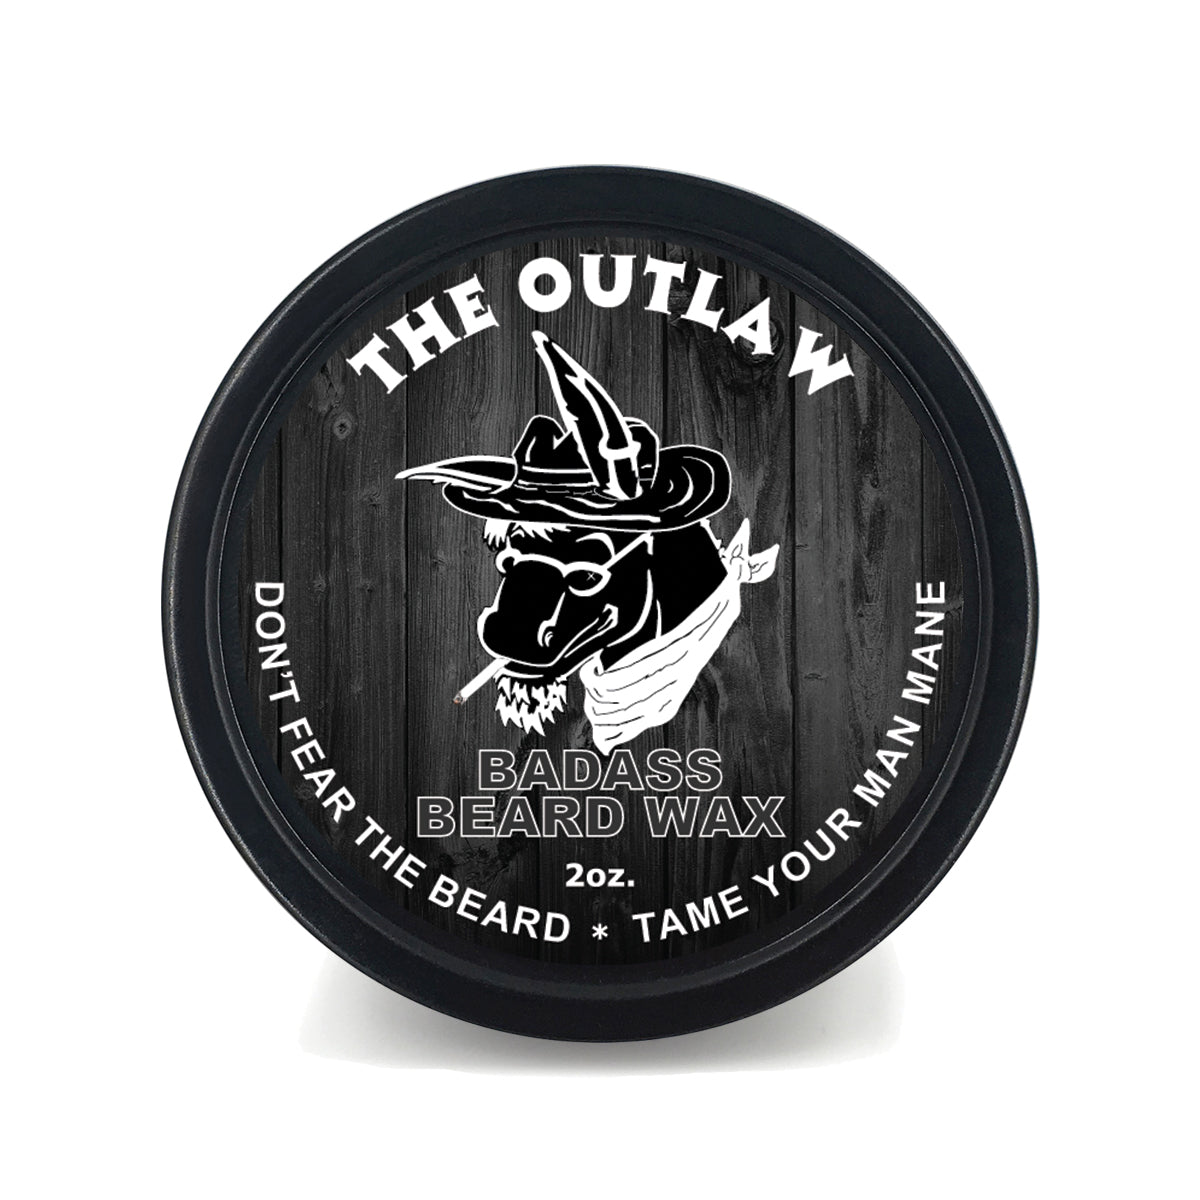 Badass Beard Wax - The Outlaw